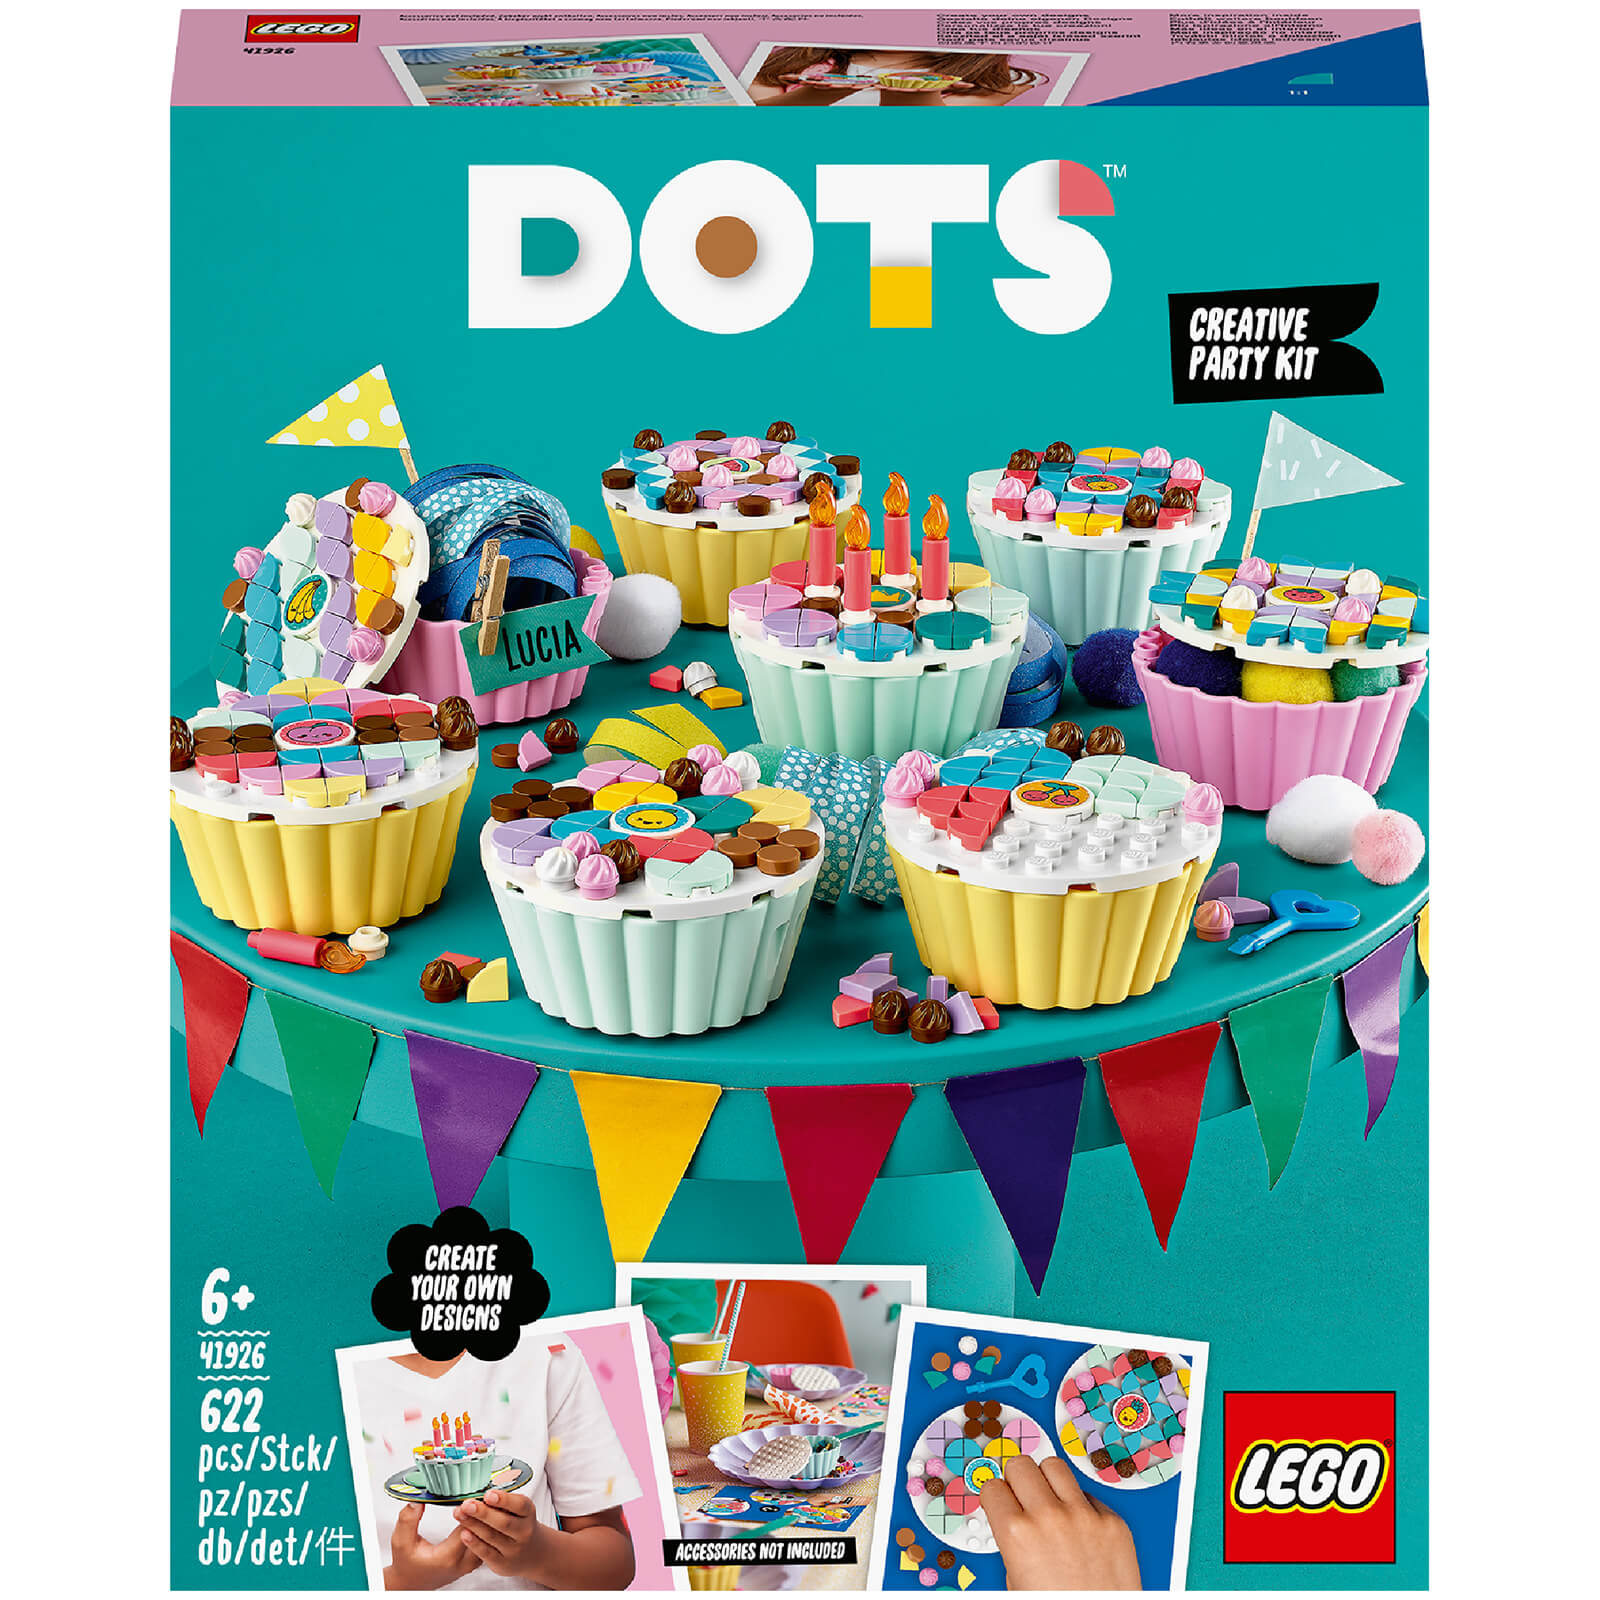 LEGO DOTS: Creative Party Kit Birthday Cupcakes Set (41926)